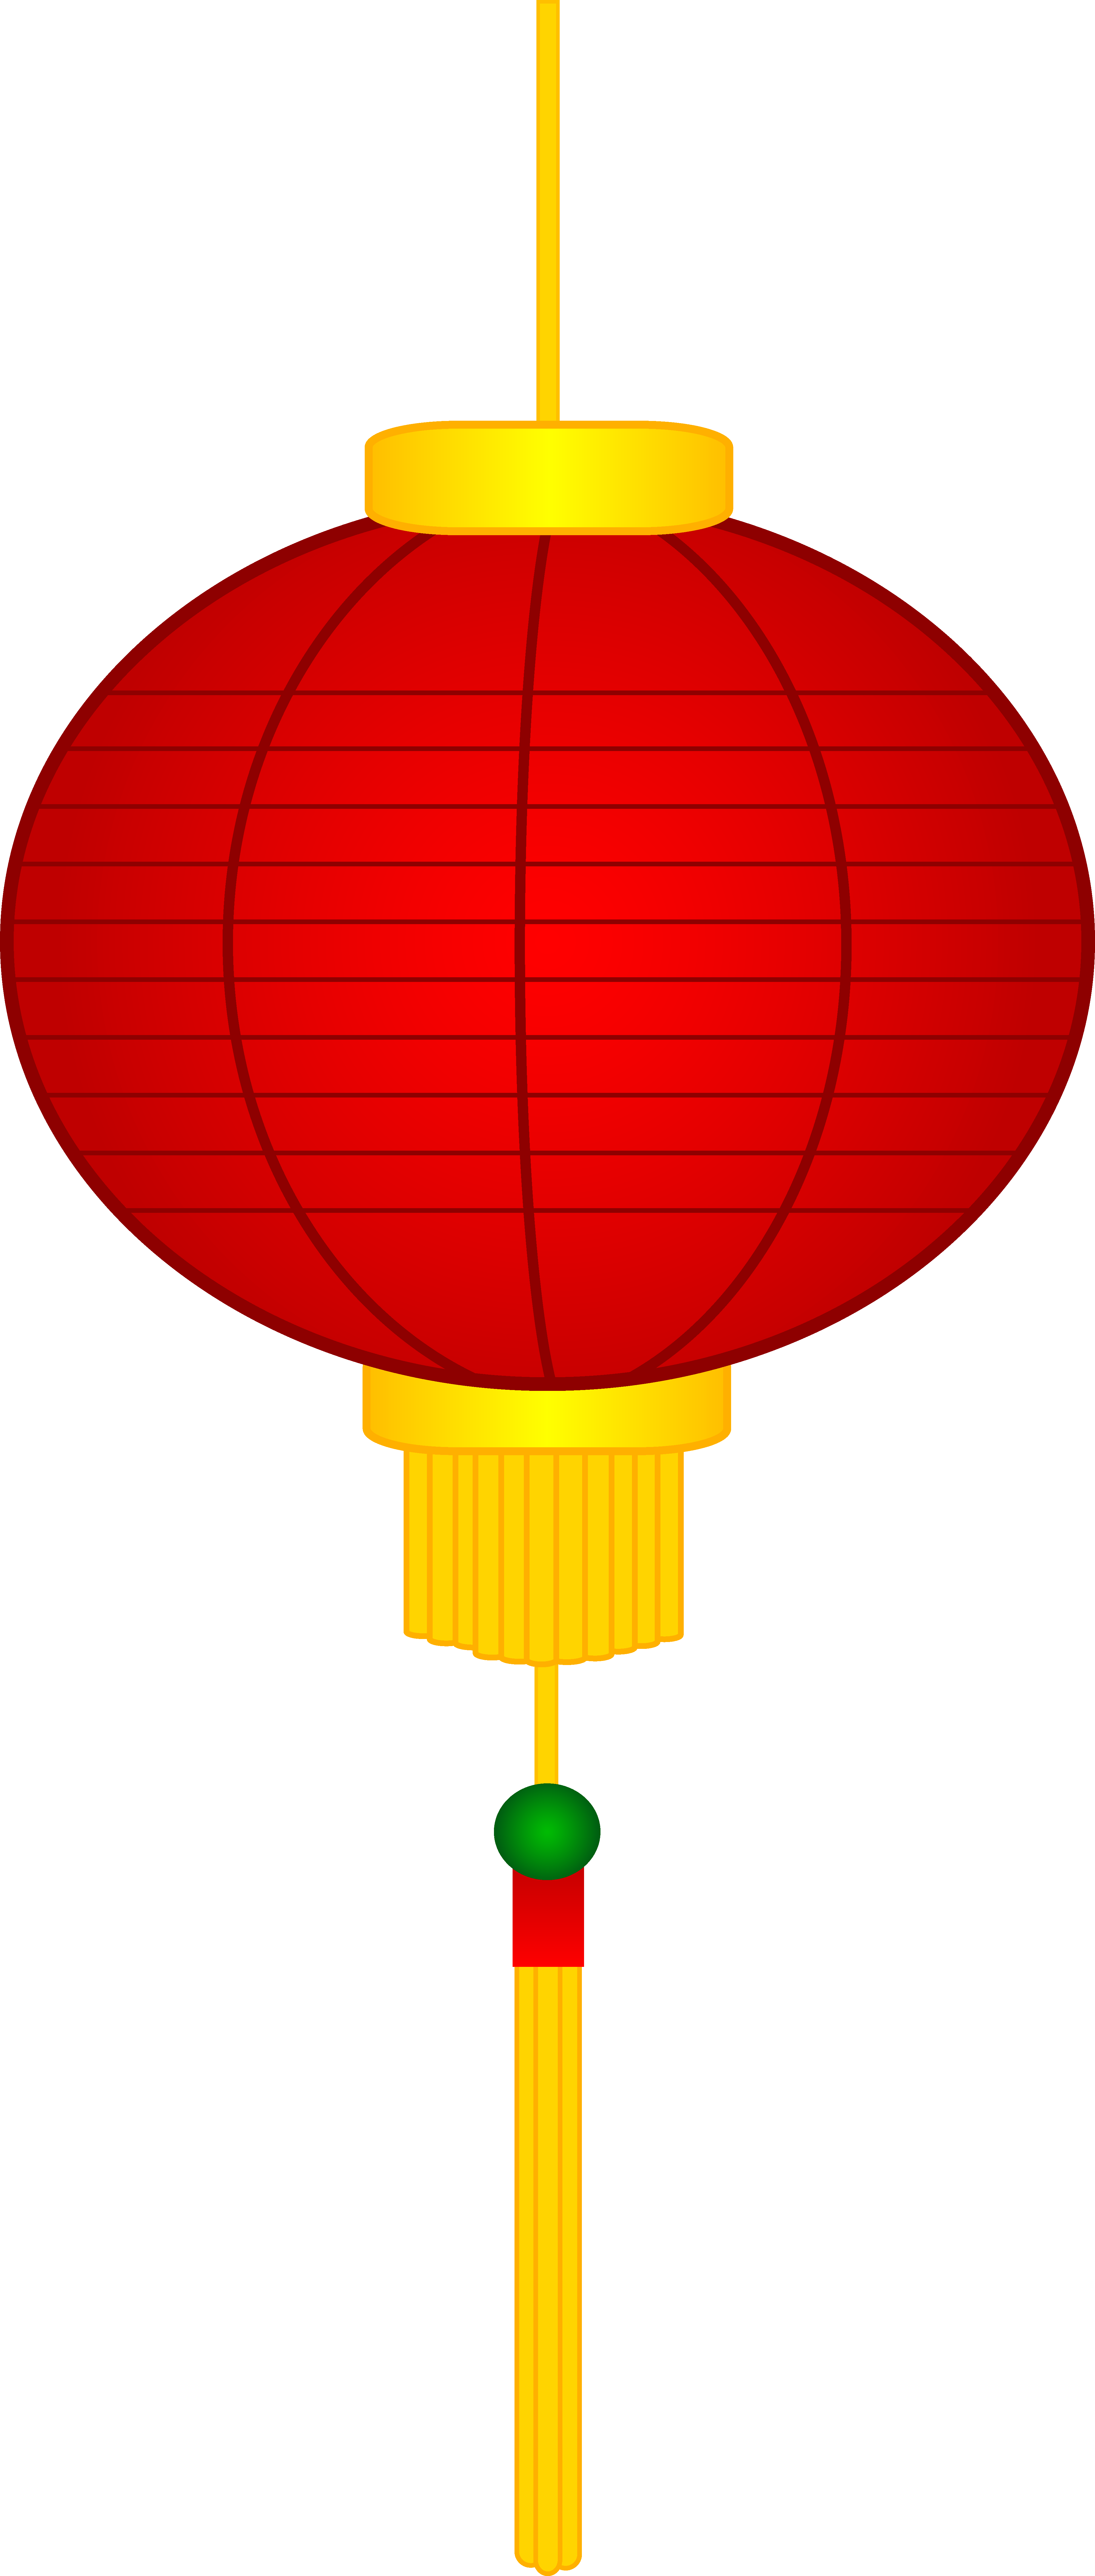 lantern clipart decoration